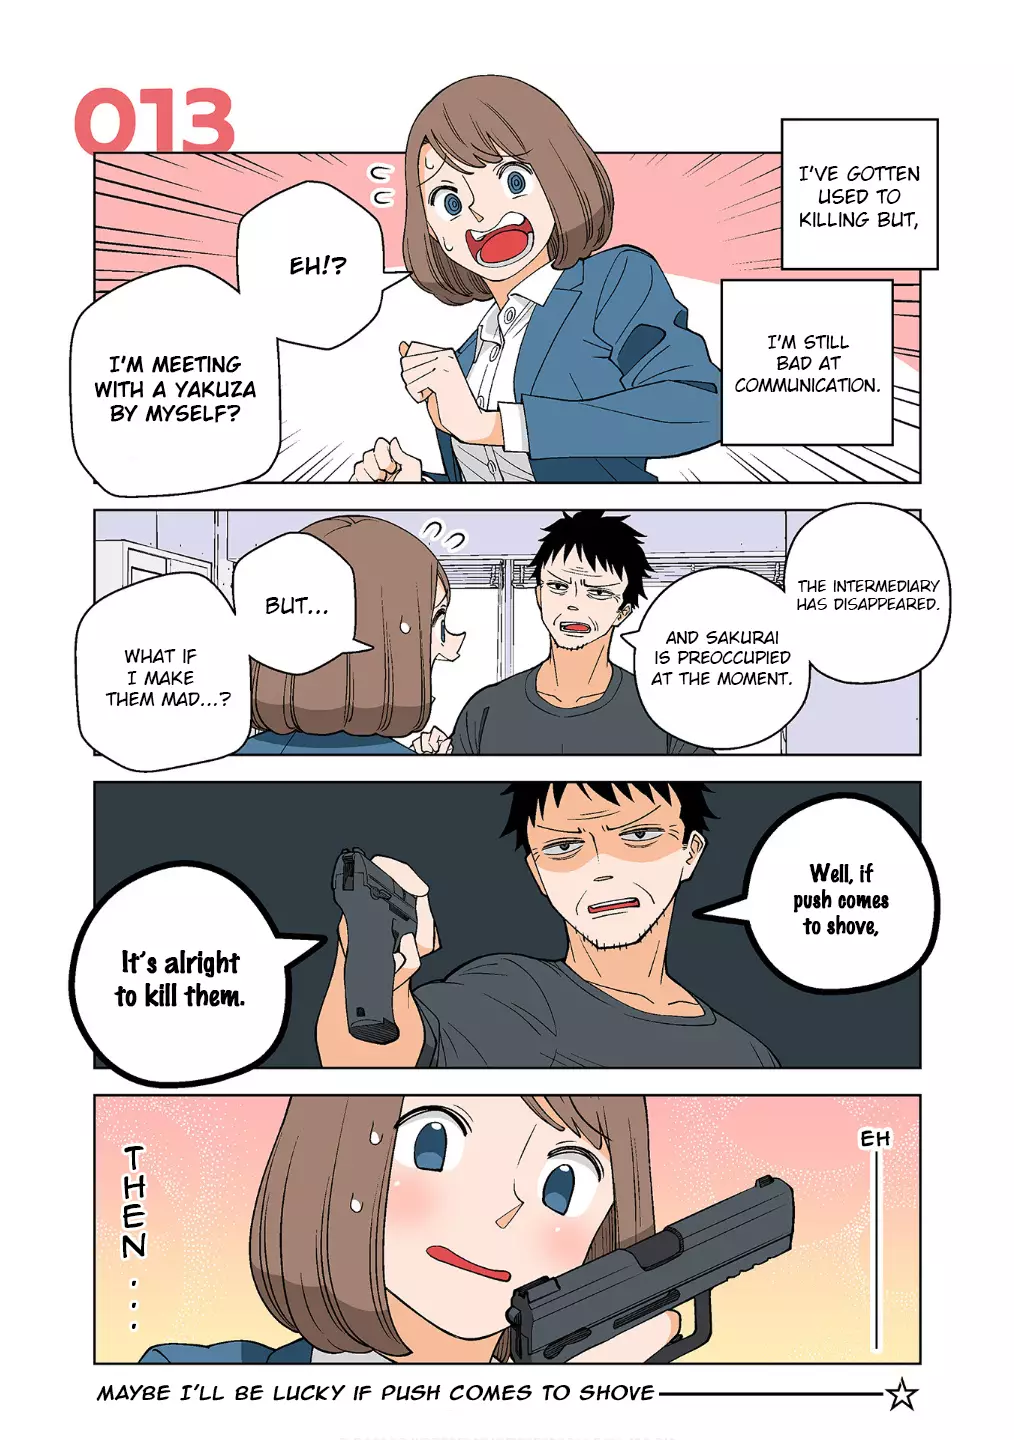 Kanako's Life As An Assassin - 13 page 1